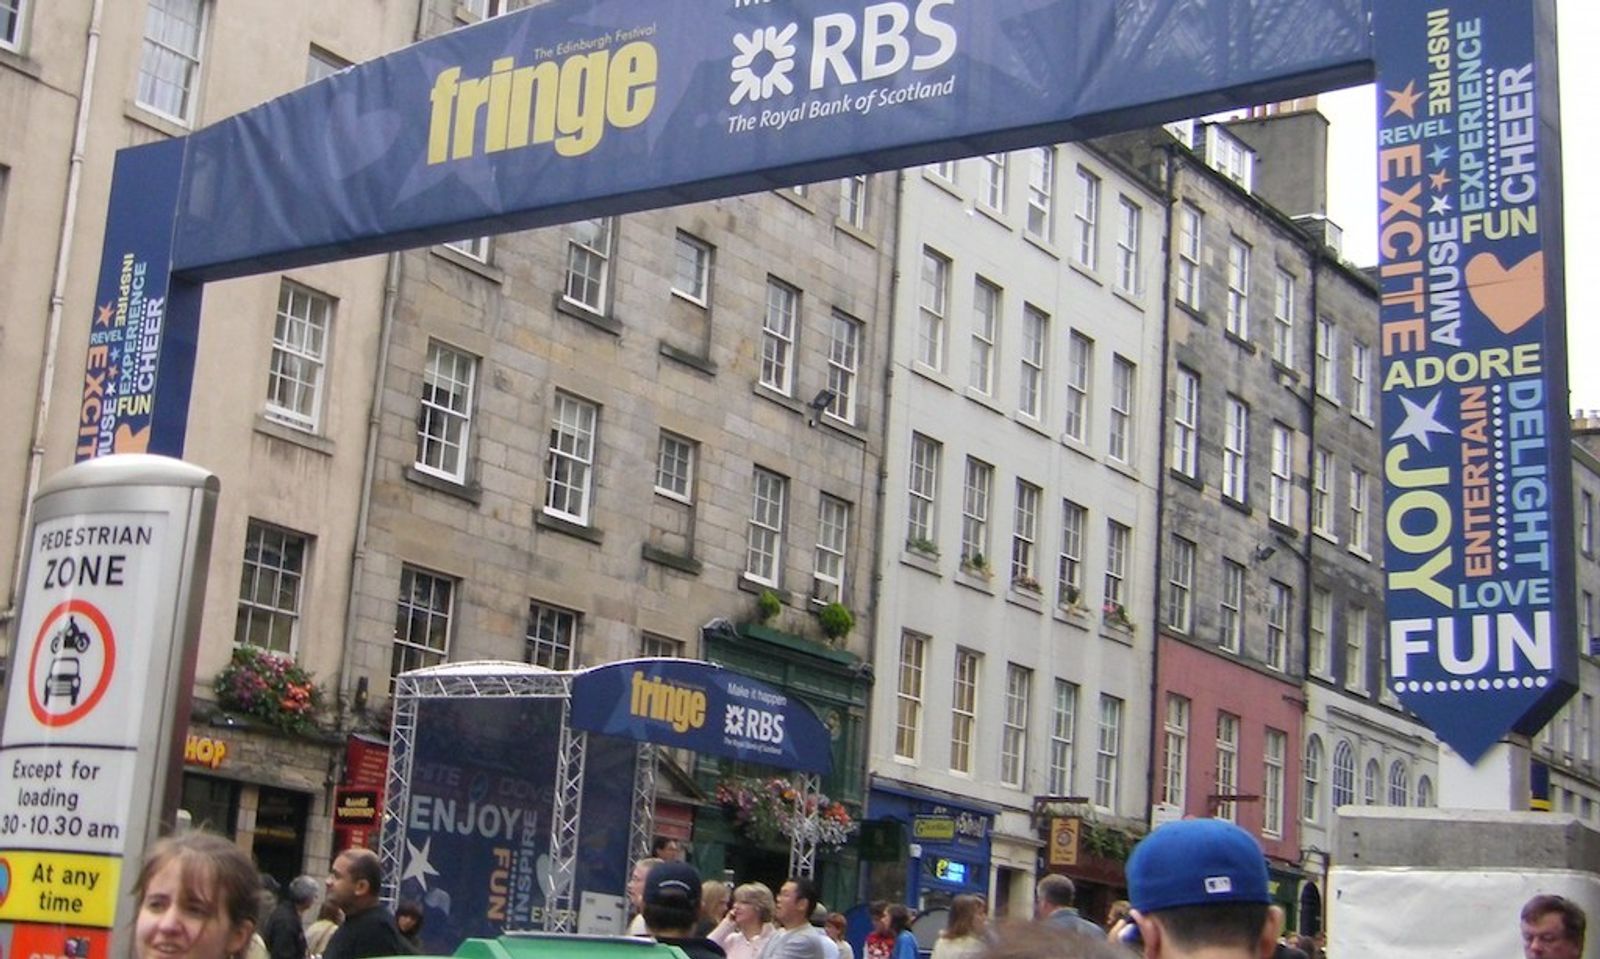 Edinburgh Fringe Festival Features Feast of Nude Performances